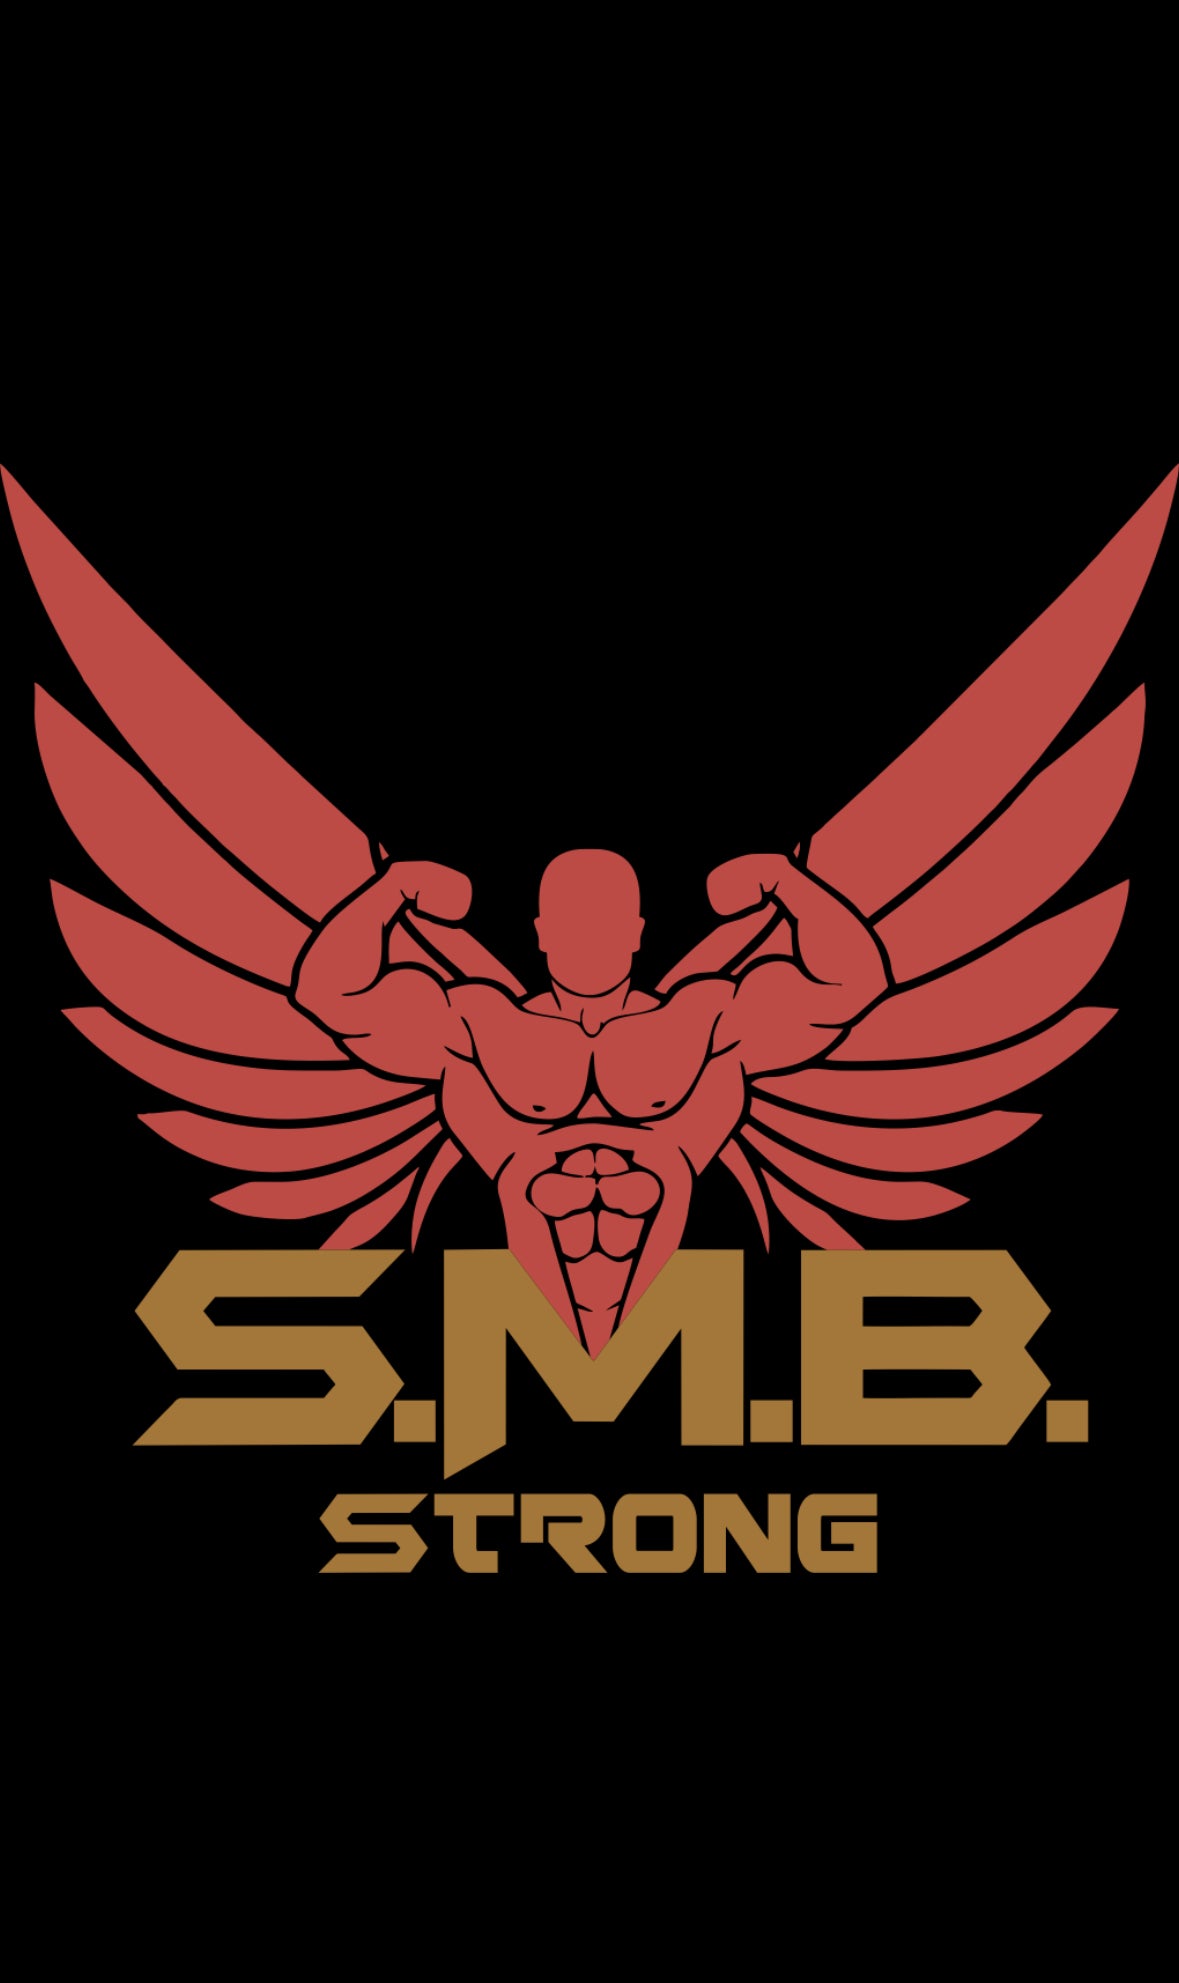 S.M.B. Health & fitness